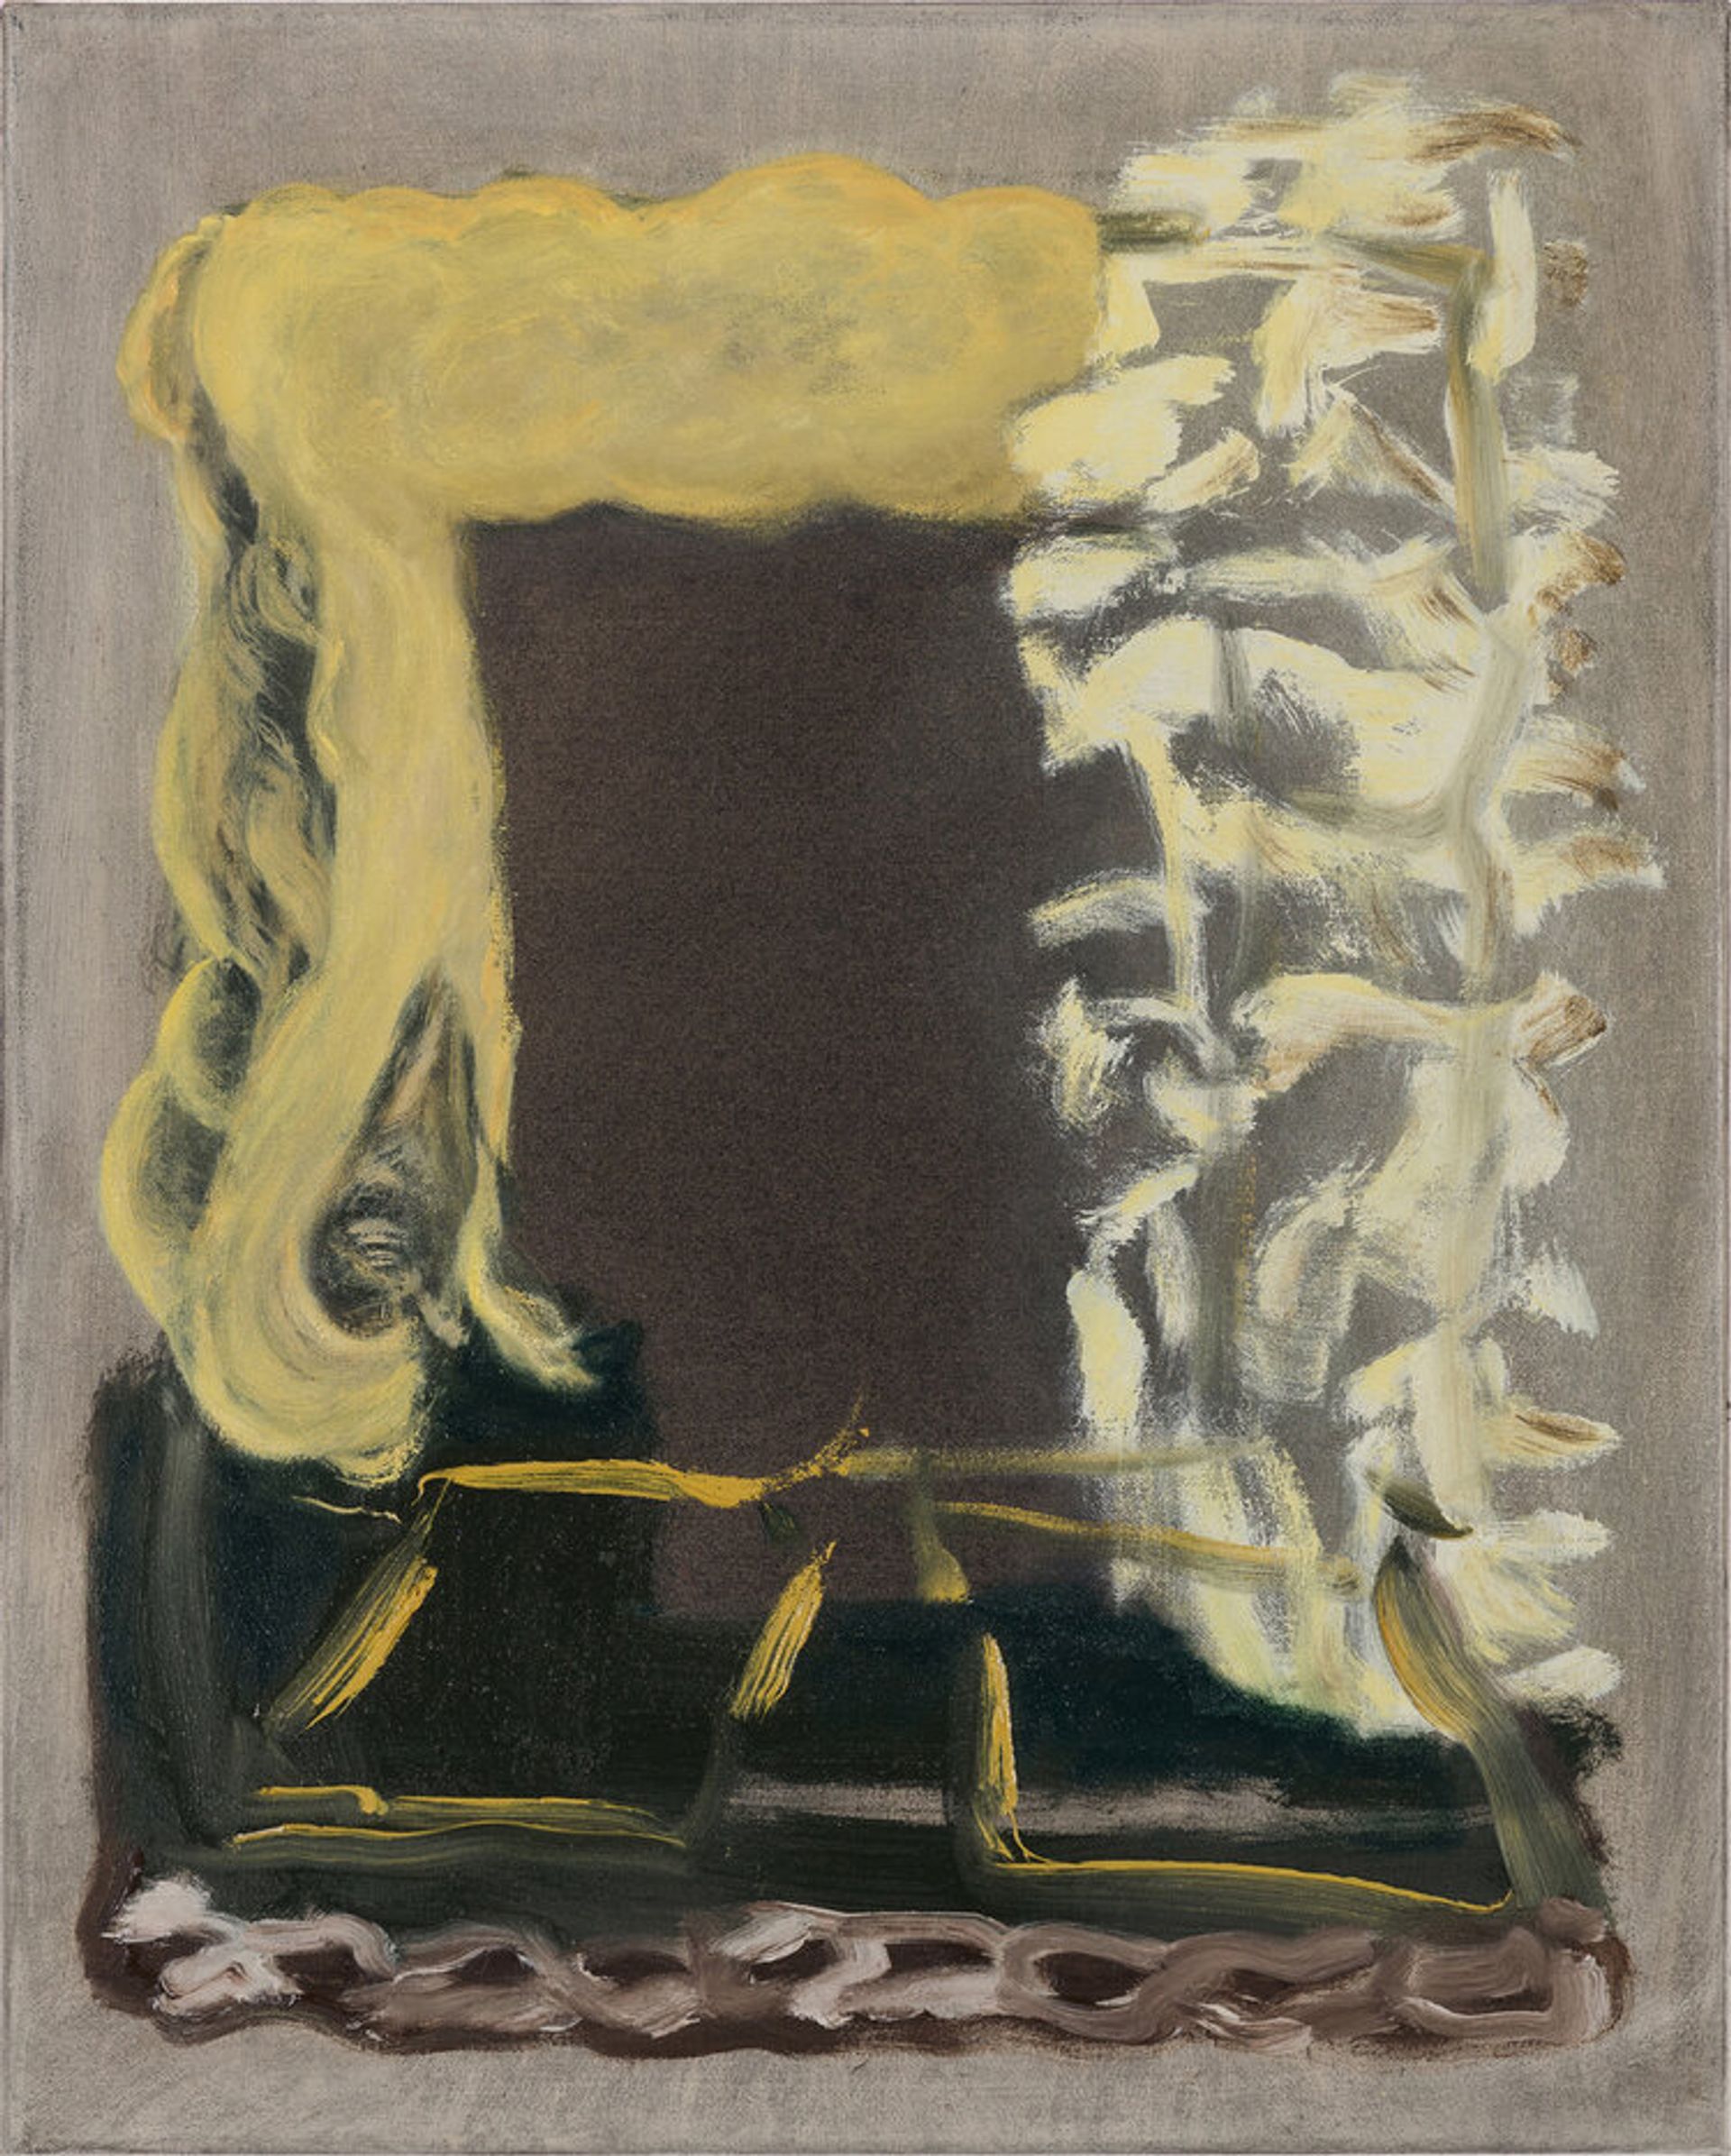 Veronika Hilger, Untitled, 2018, oil on canvas, 50 × 40 cm